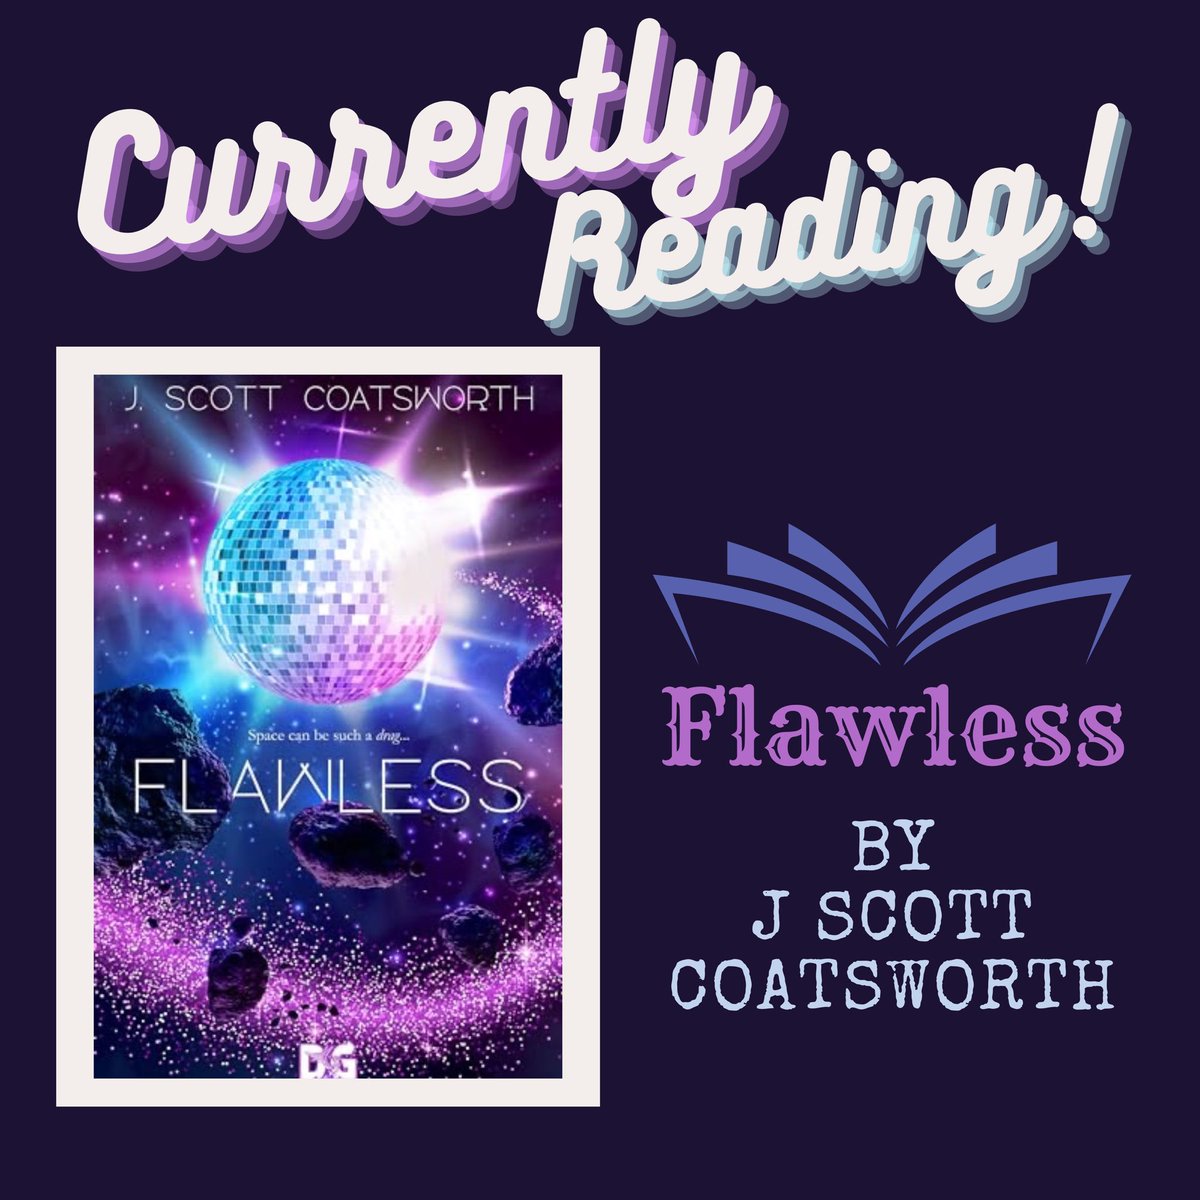 What am I reading today?
I am reading:

Flawless by J Scott Coatsworth. 
a.co/d/eV8FLio

#bookish
#IAmReading
#newrelease